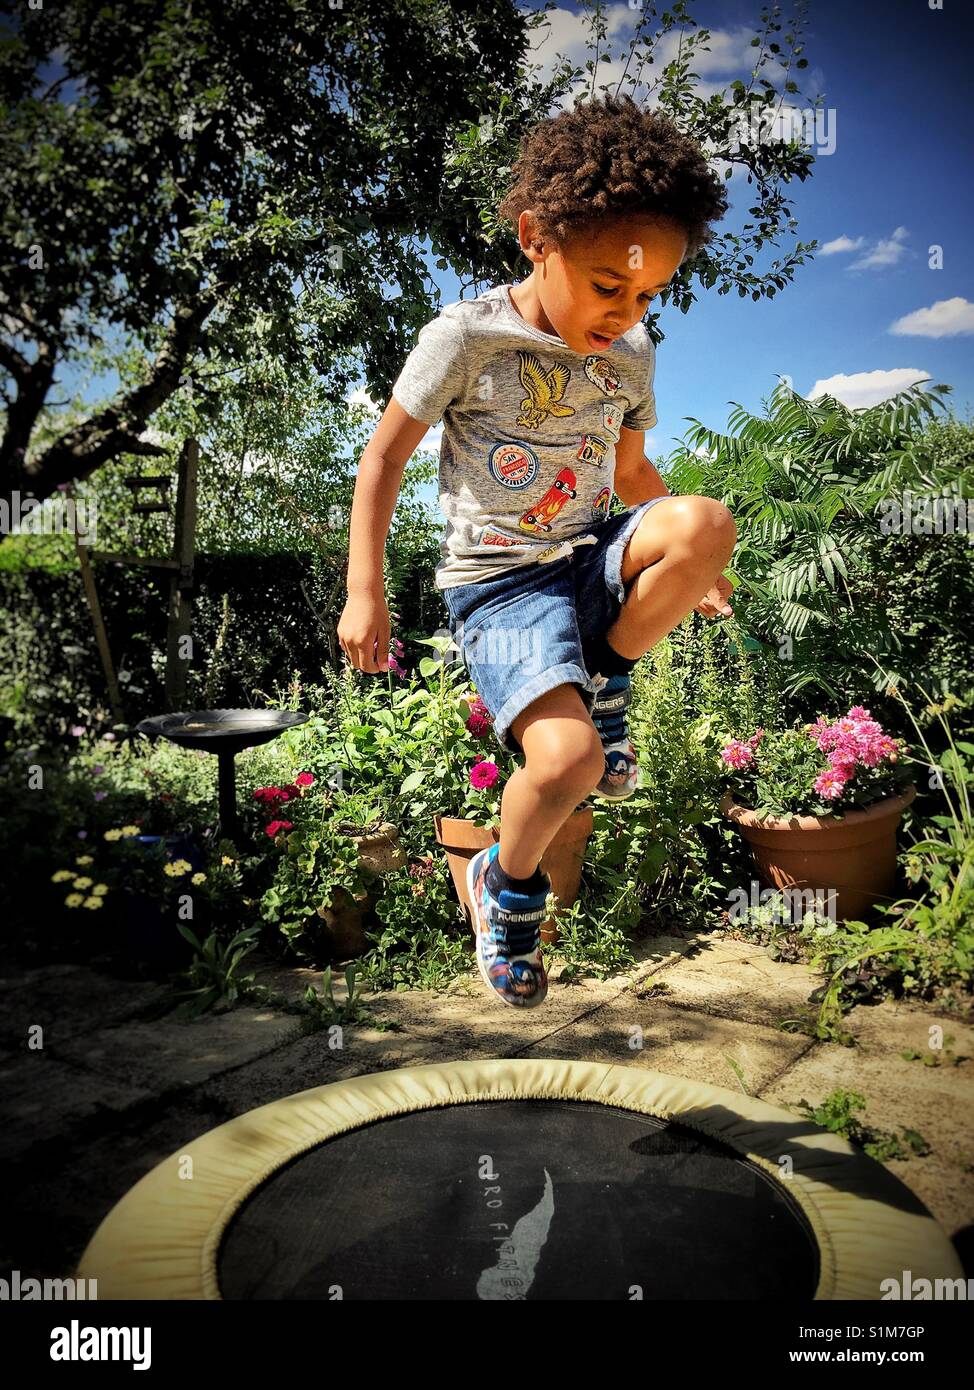 Little boy jumps on a garden trampoline Stock Photo